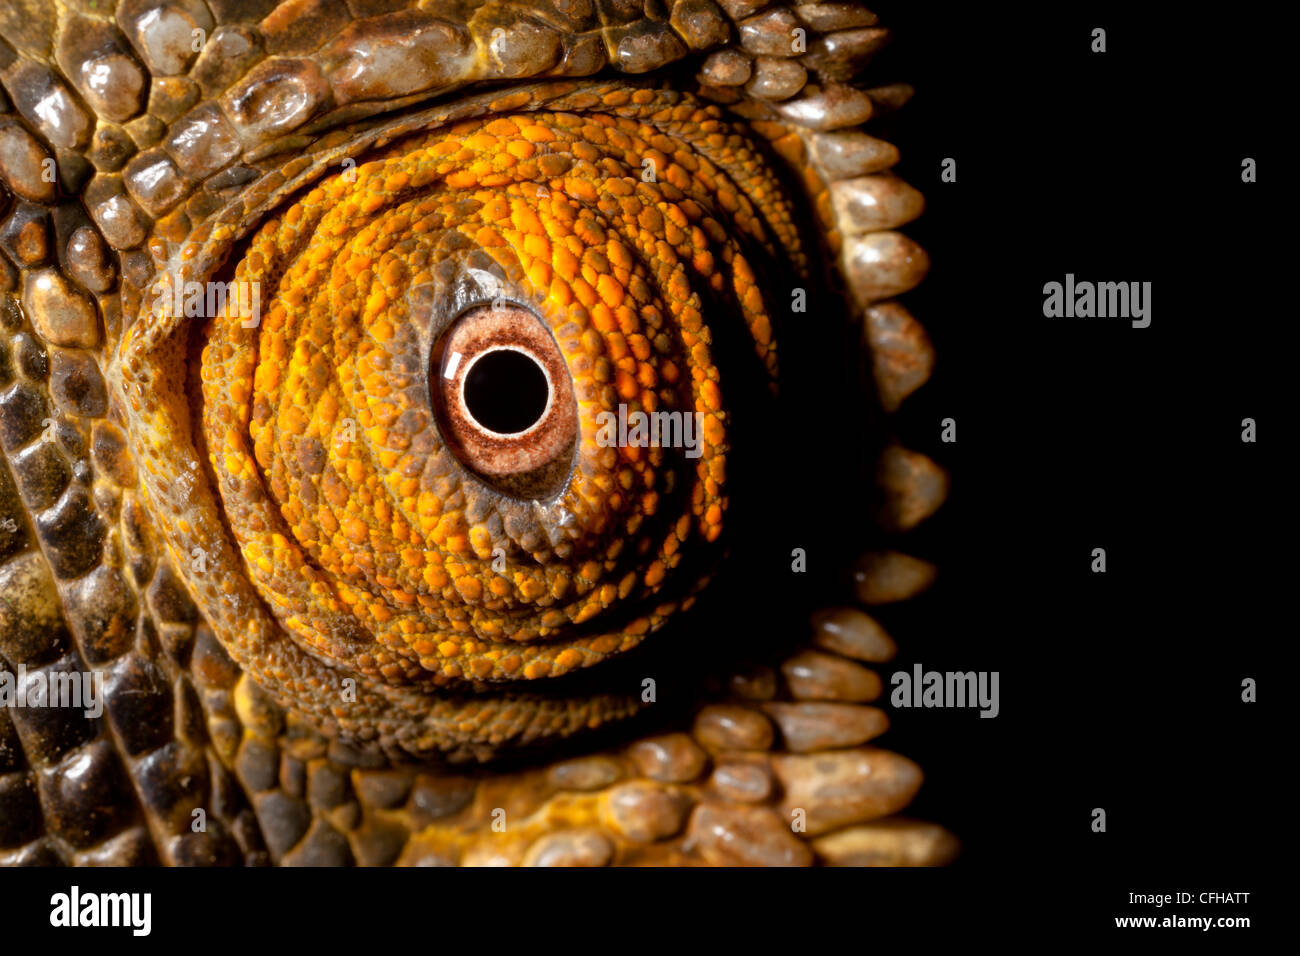 Eye of Parson's Chameleon, Madagascar Stock Photo